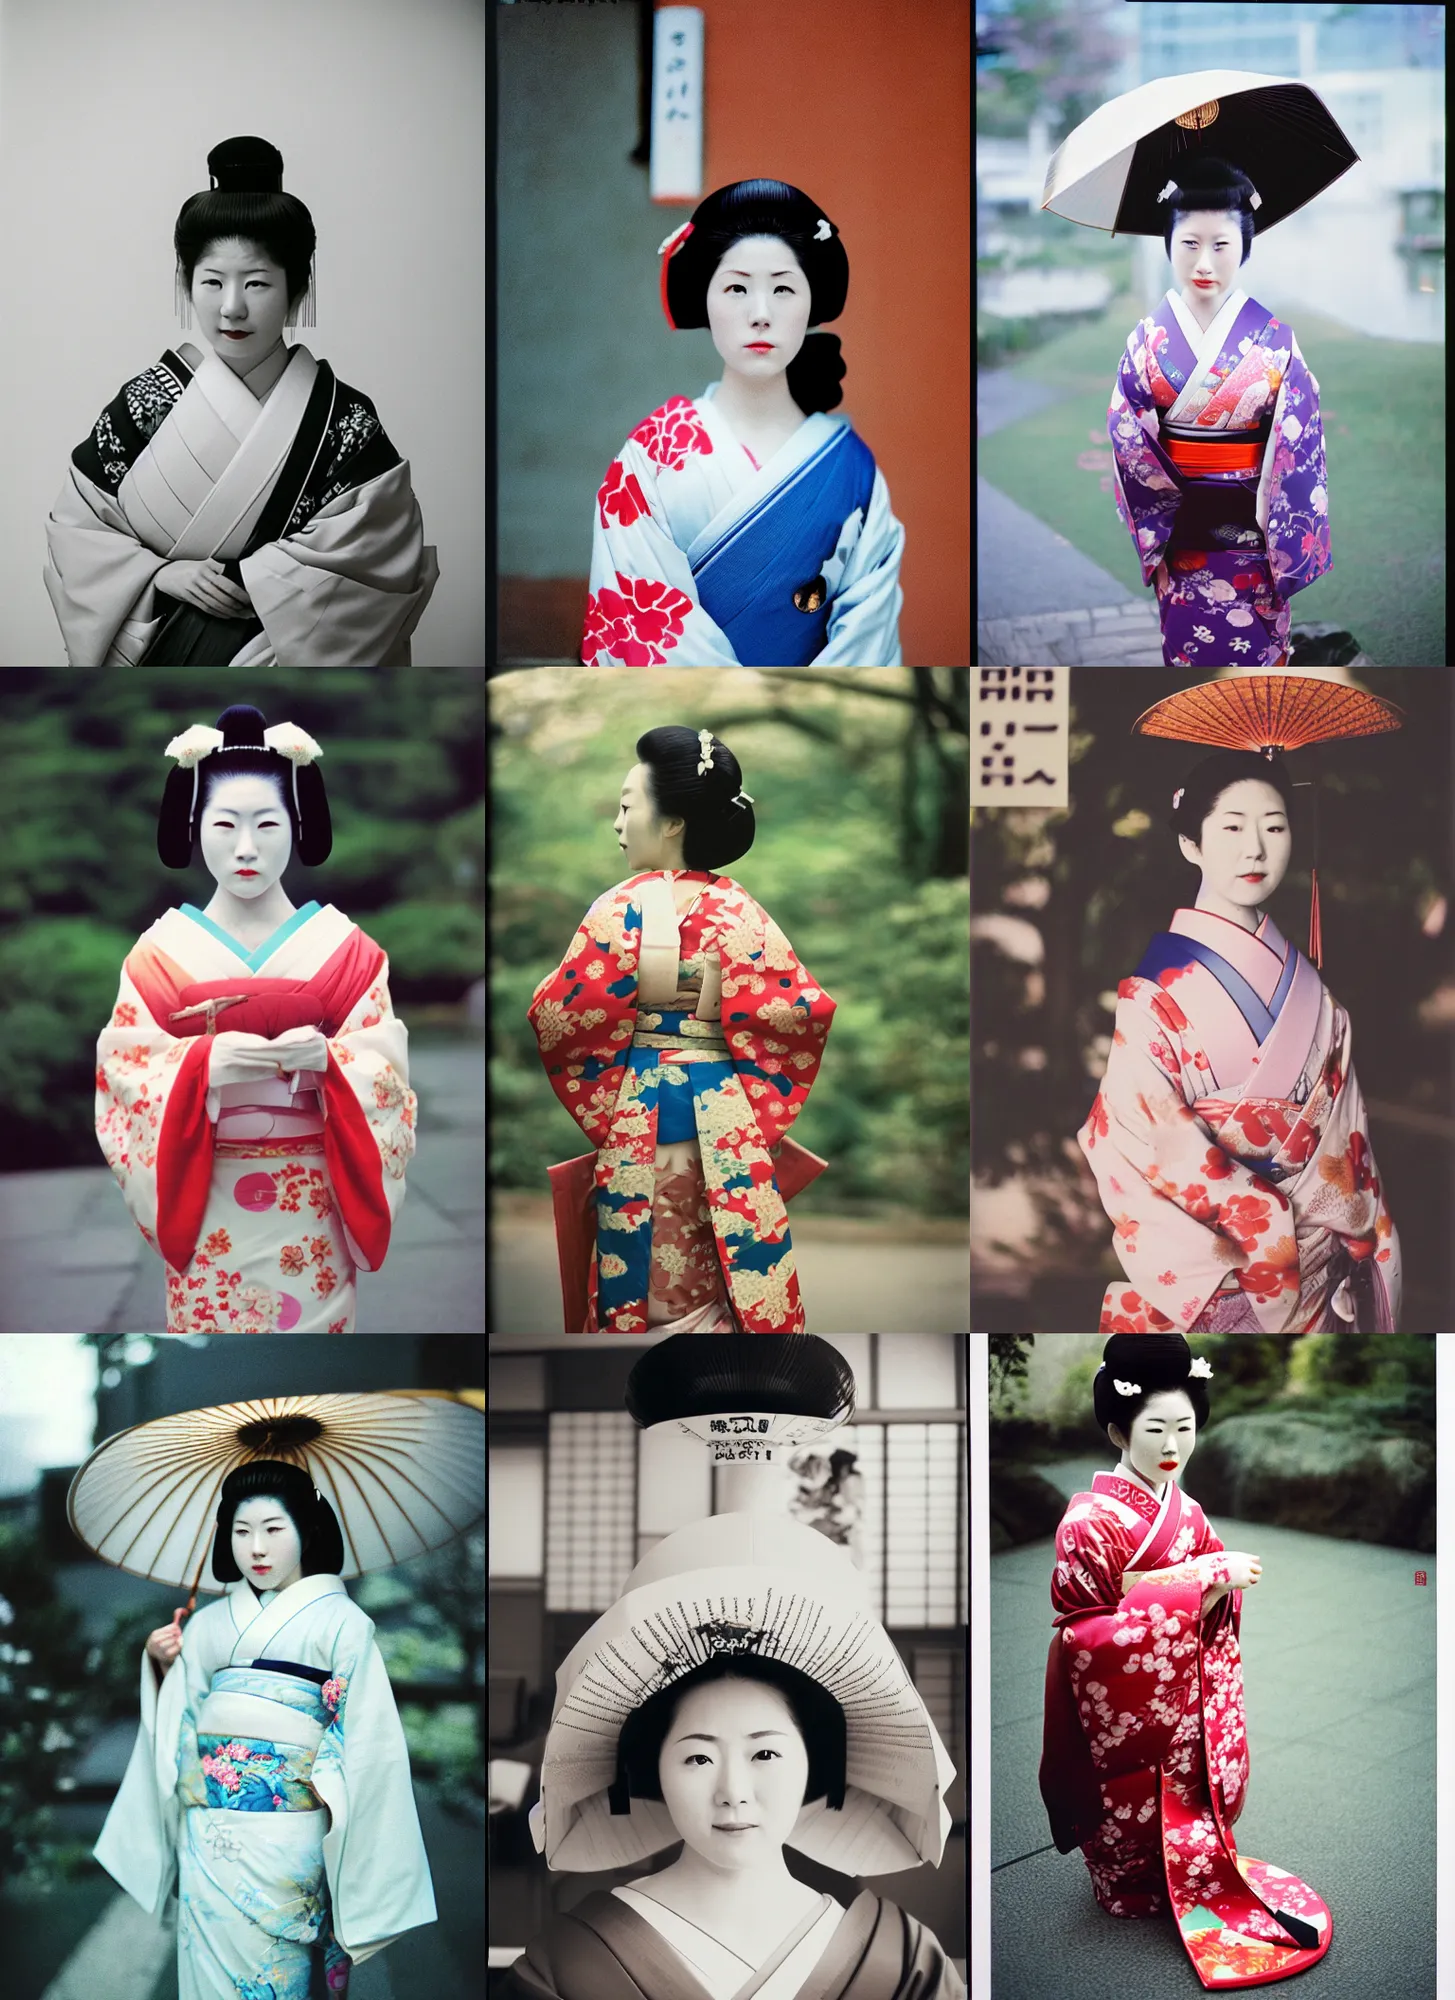 Prompt: Portrait Photograph of a Japanese Geisha Konica Impresa 100